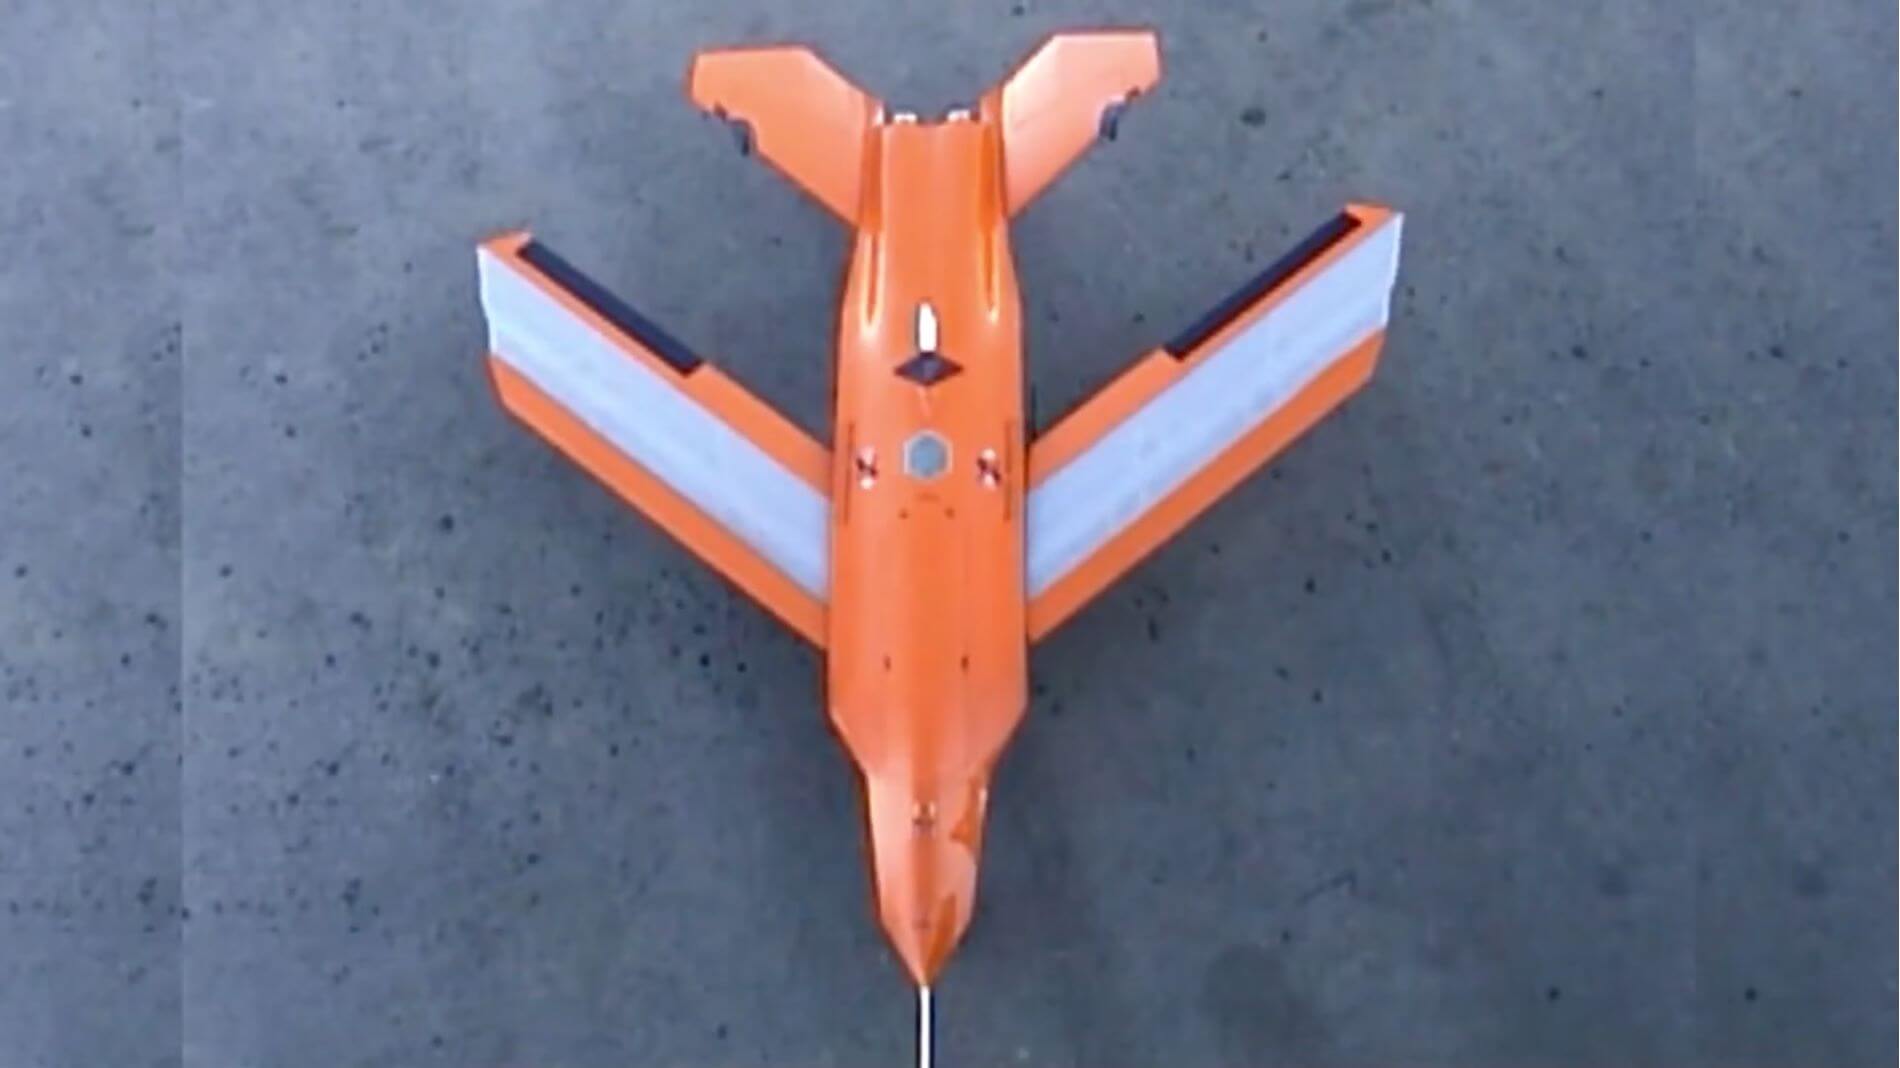 NextGen drone design AeroTime News